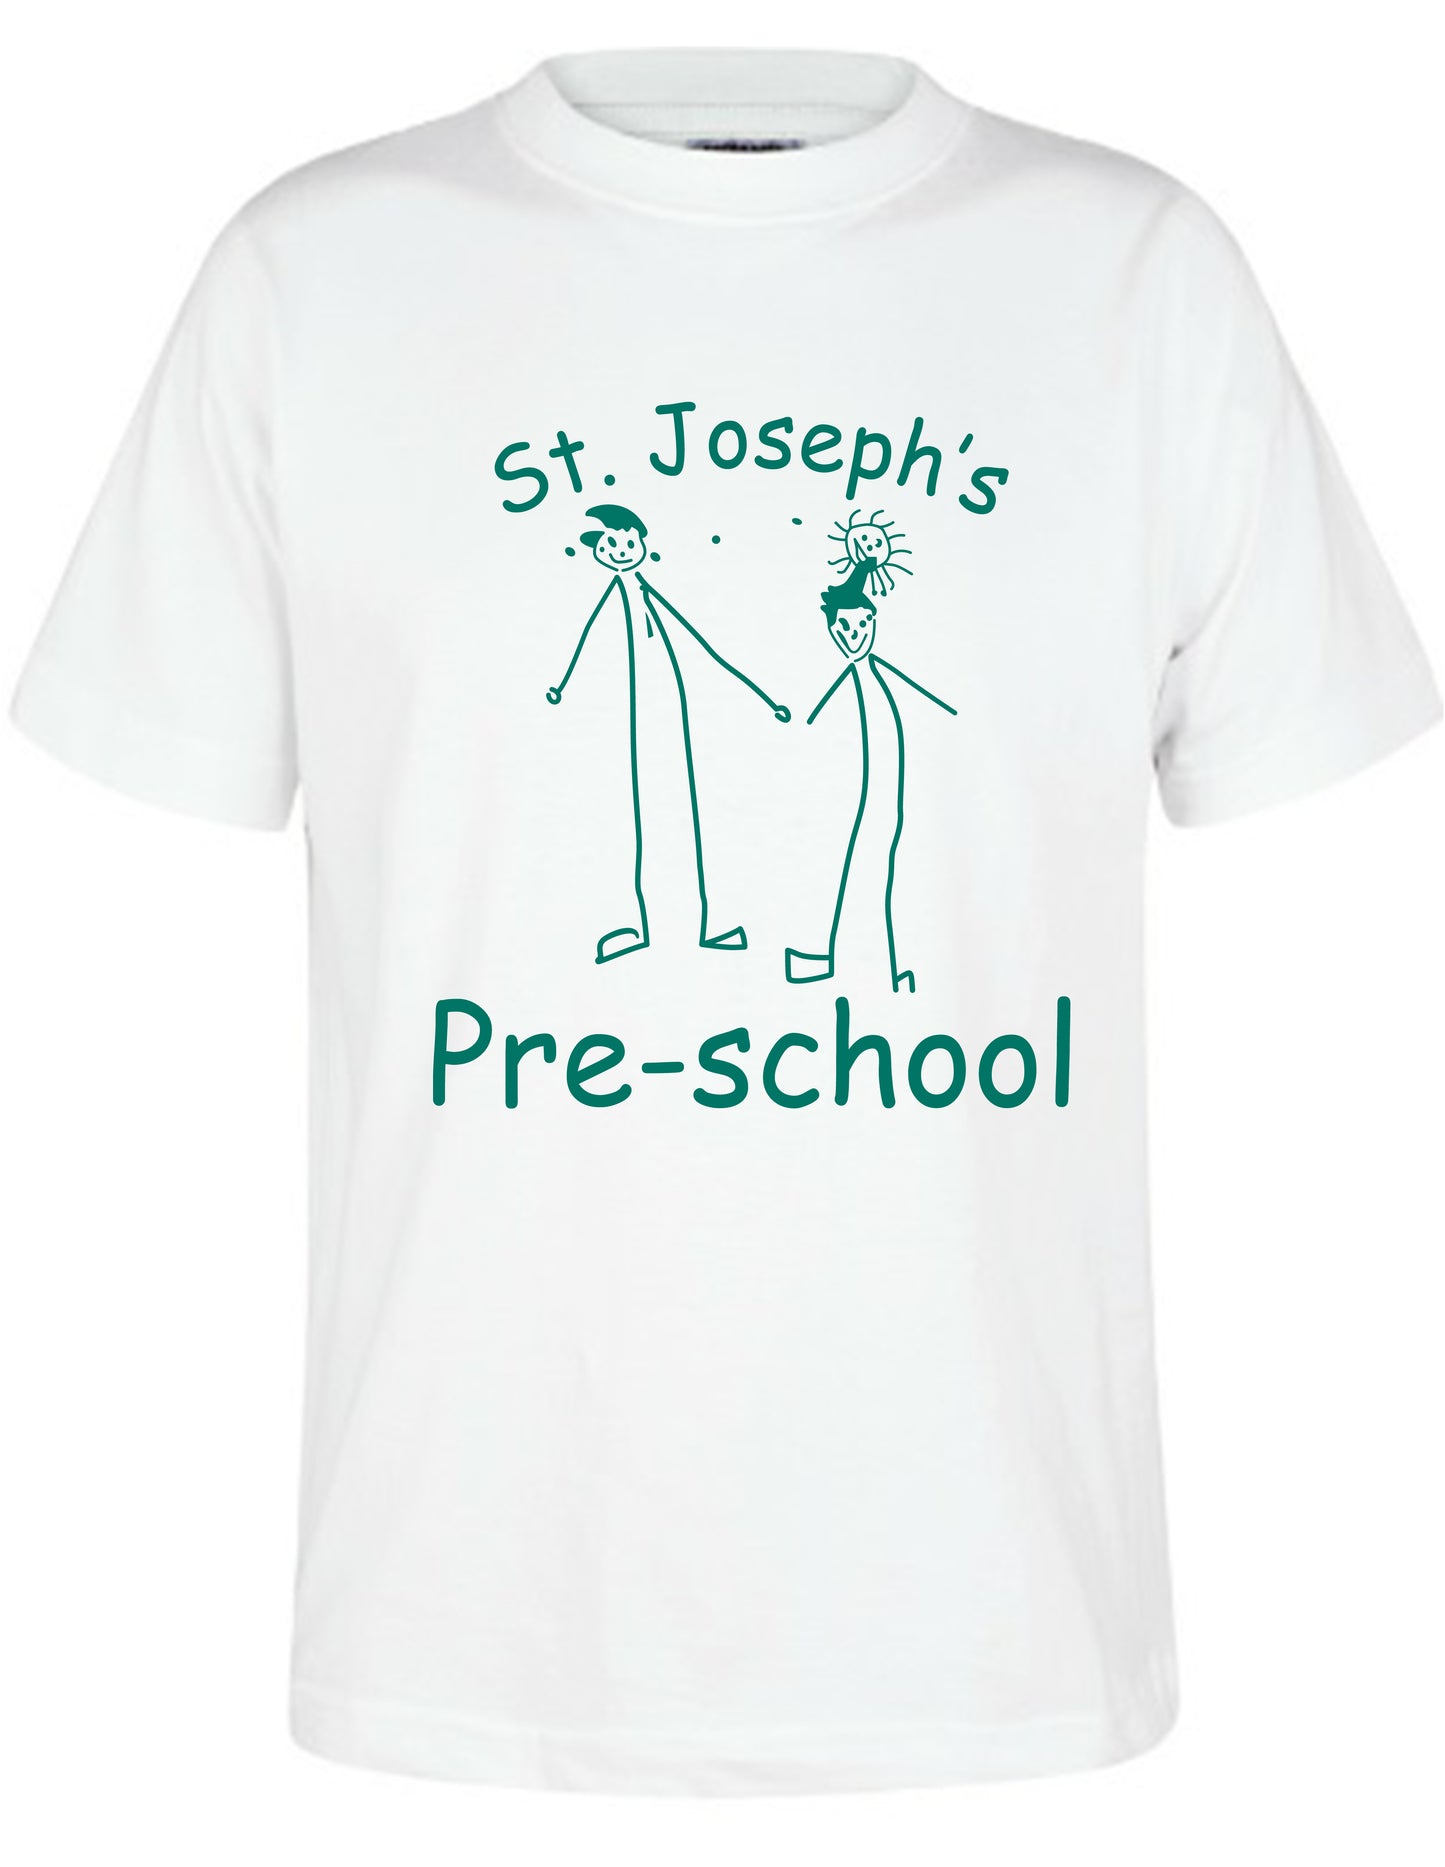 St Joseph's Catholic Primary School - Unisex Cotton T-Shirt - White - School Uniform Shop